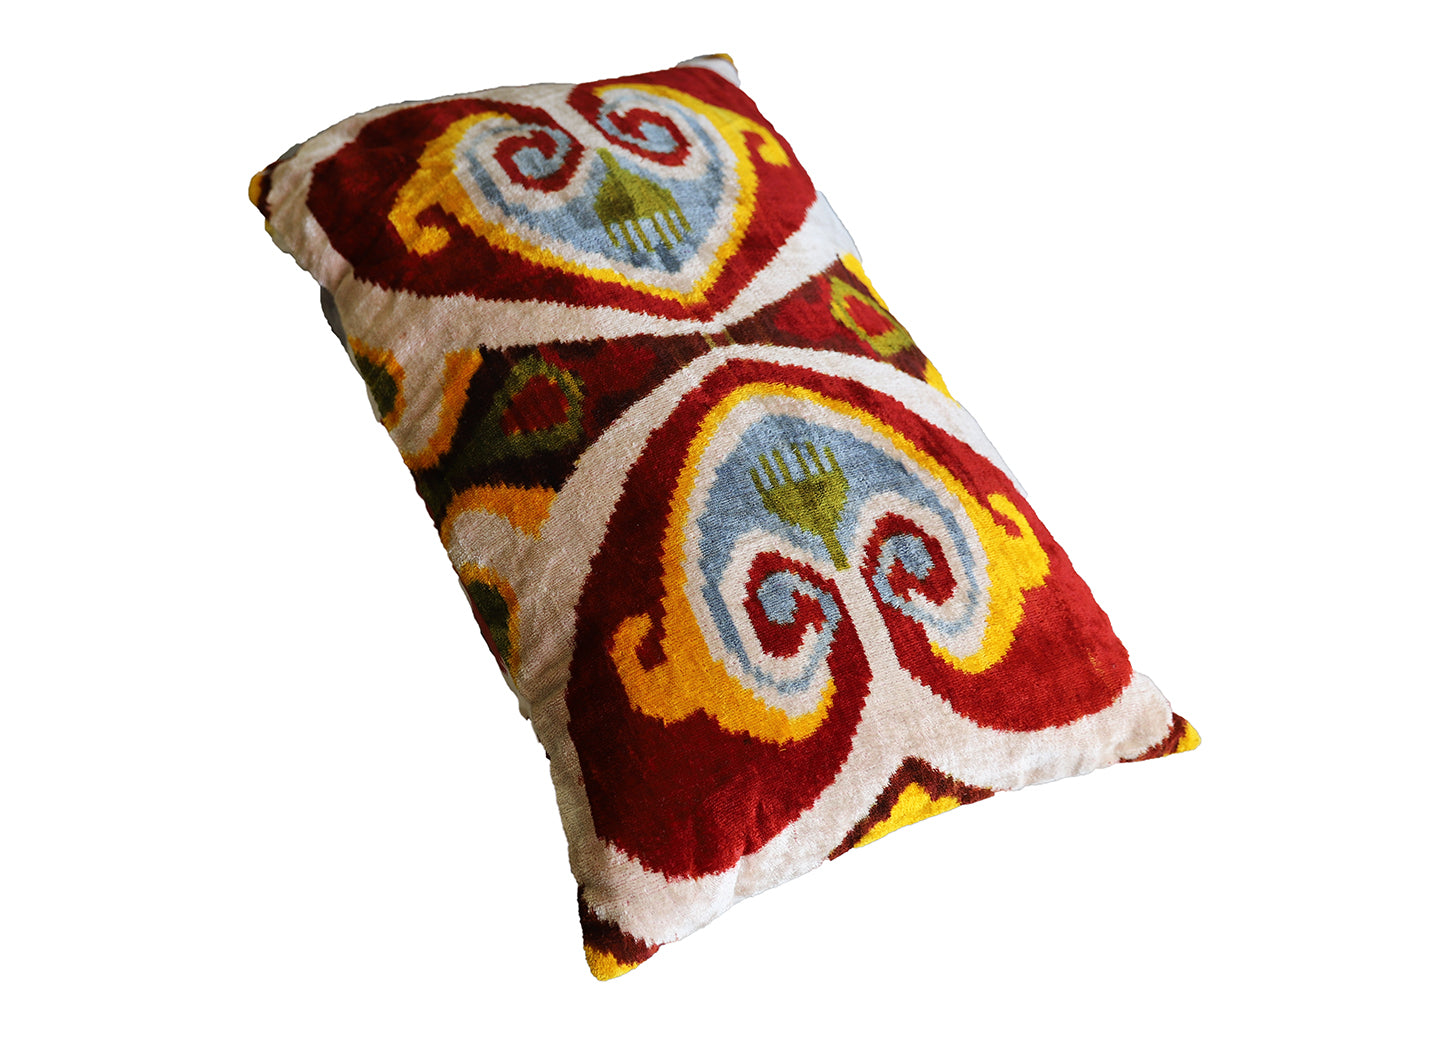 Small Rectangular Velvet Ikat with Silk Backing Pillow